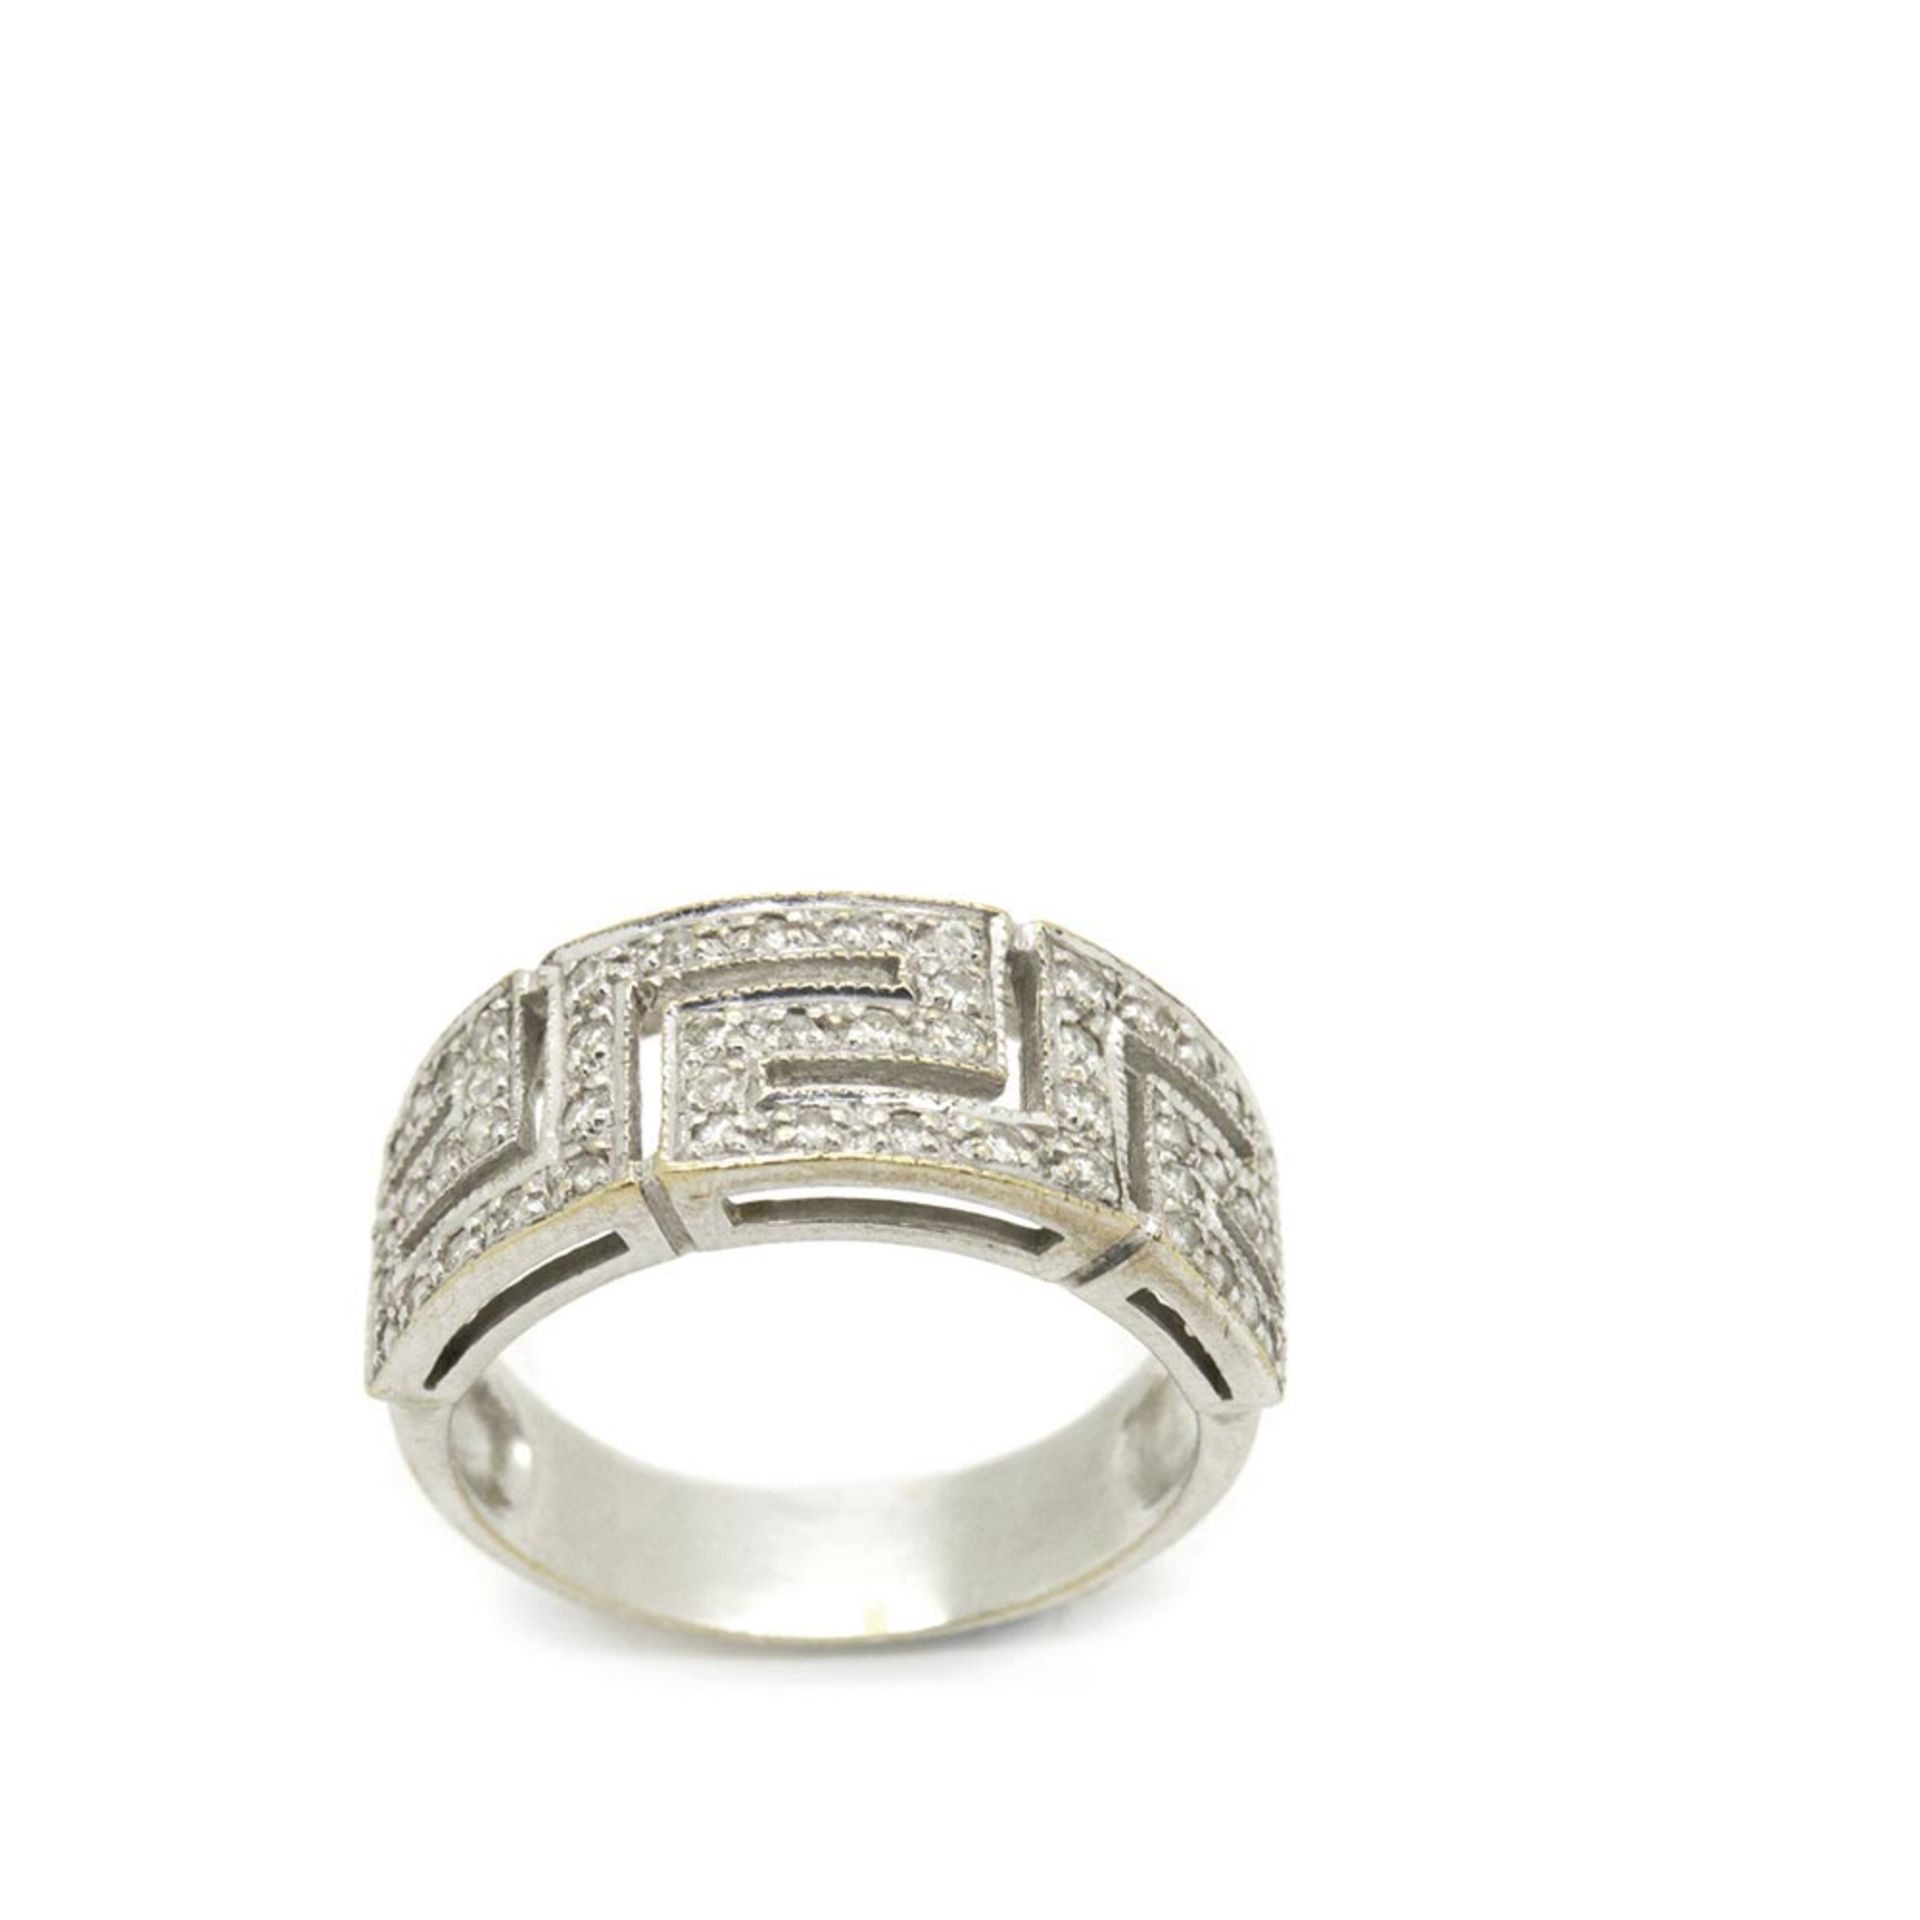 White gold and diamonds ring Sortija diseño greca calada en oro blanco cuajada de brillantes